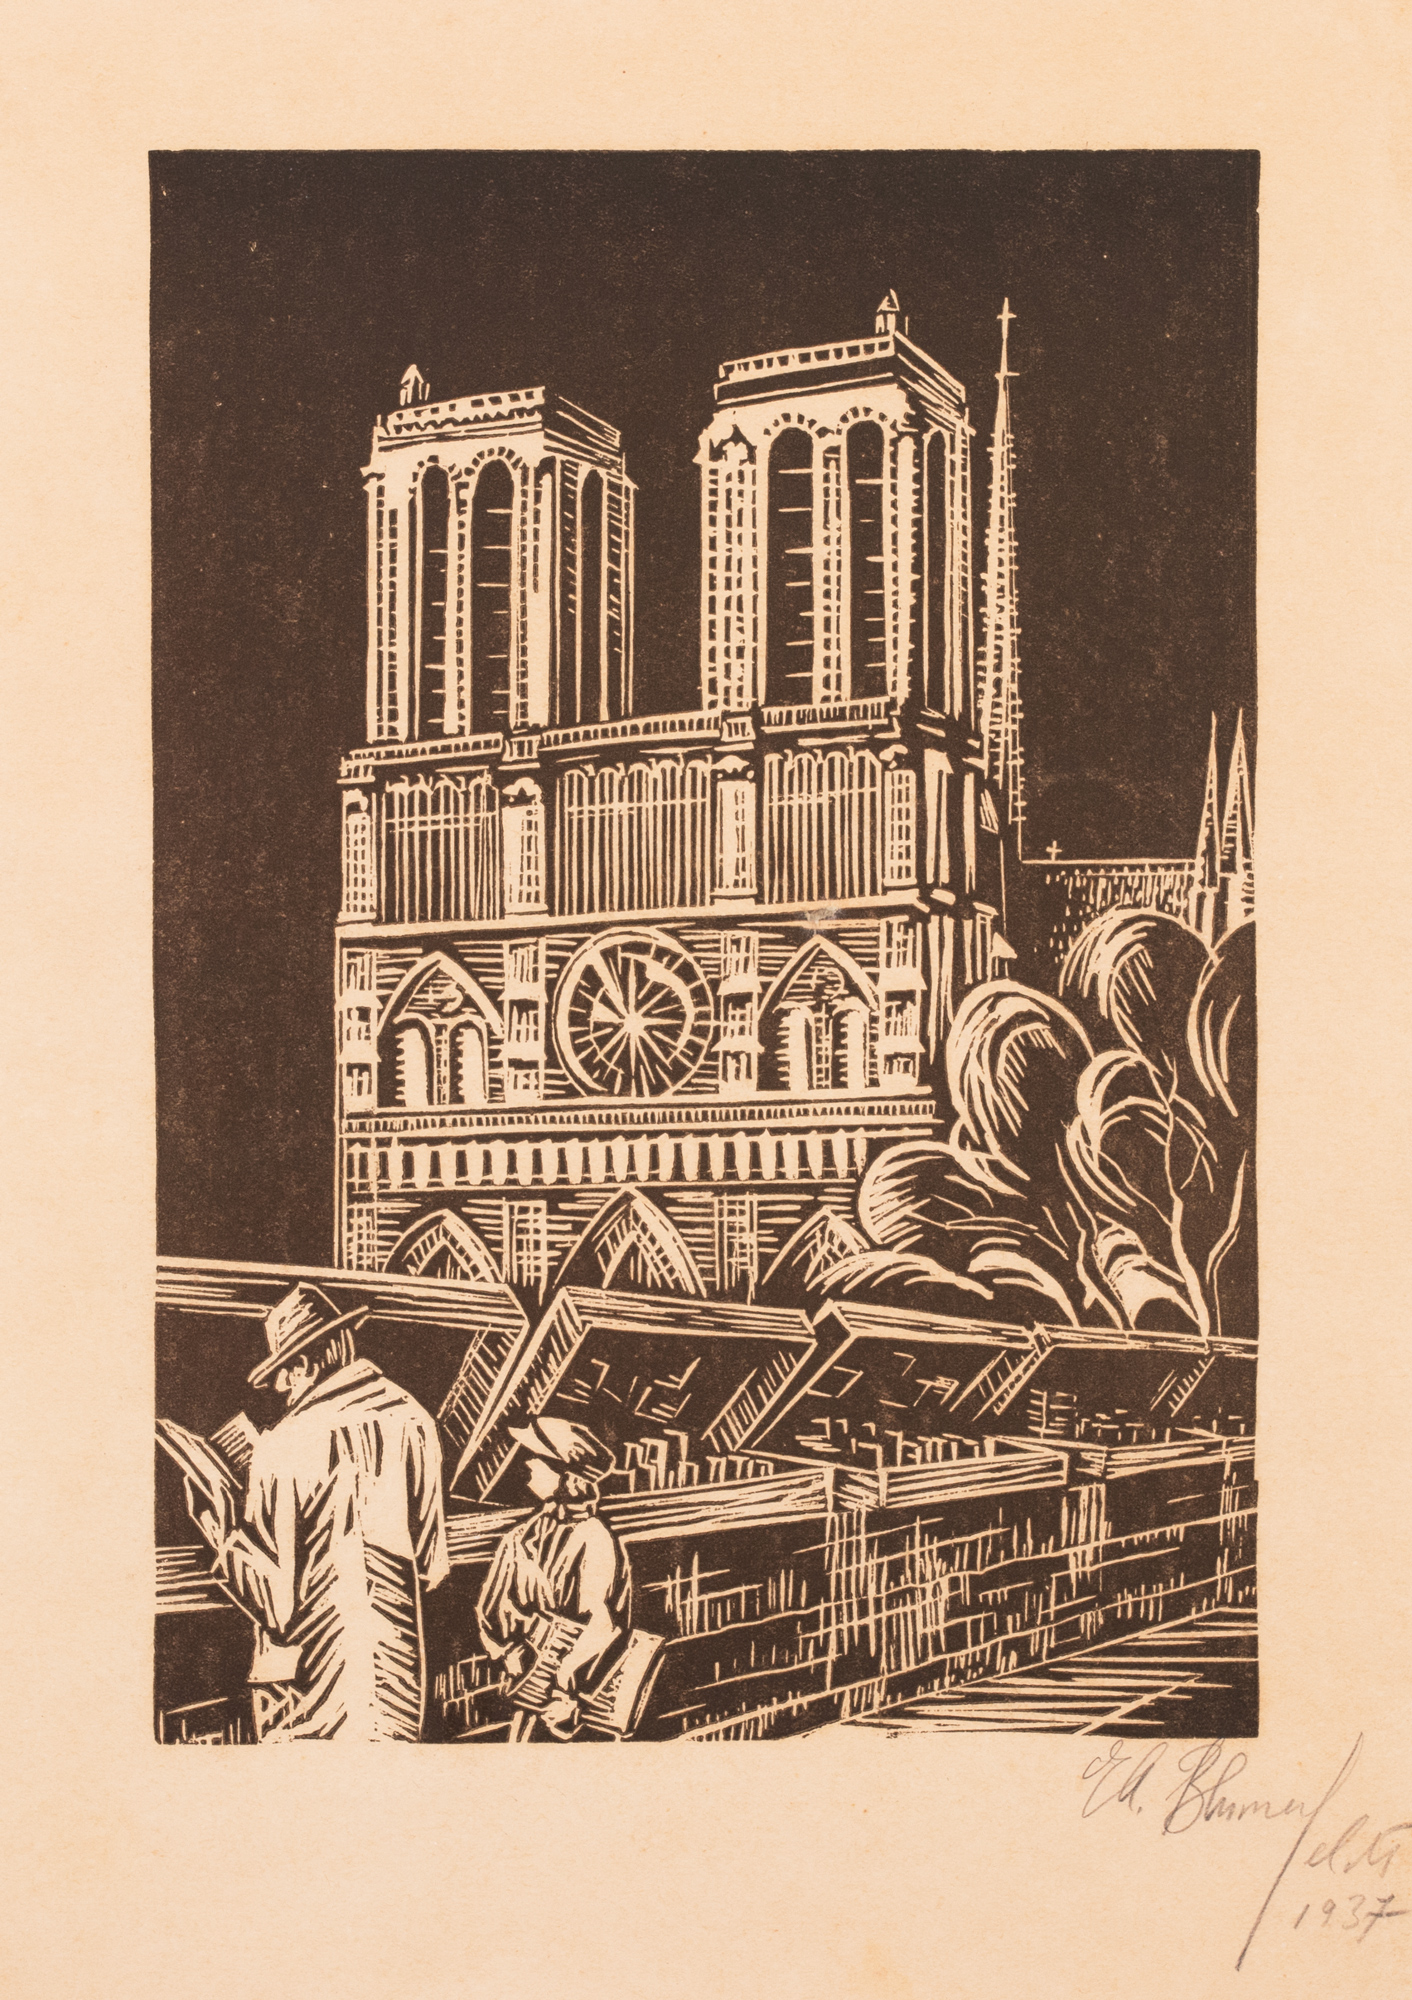 Edmond Arnold Blumenfeldt "Notre-Dame külastajatega"